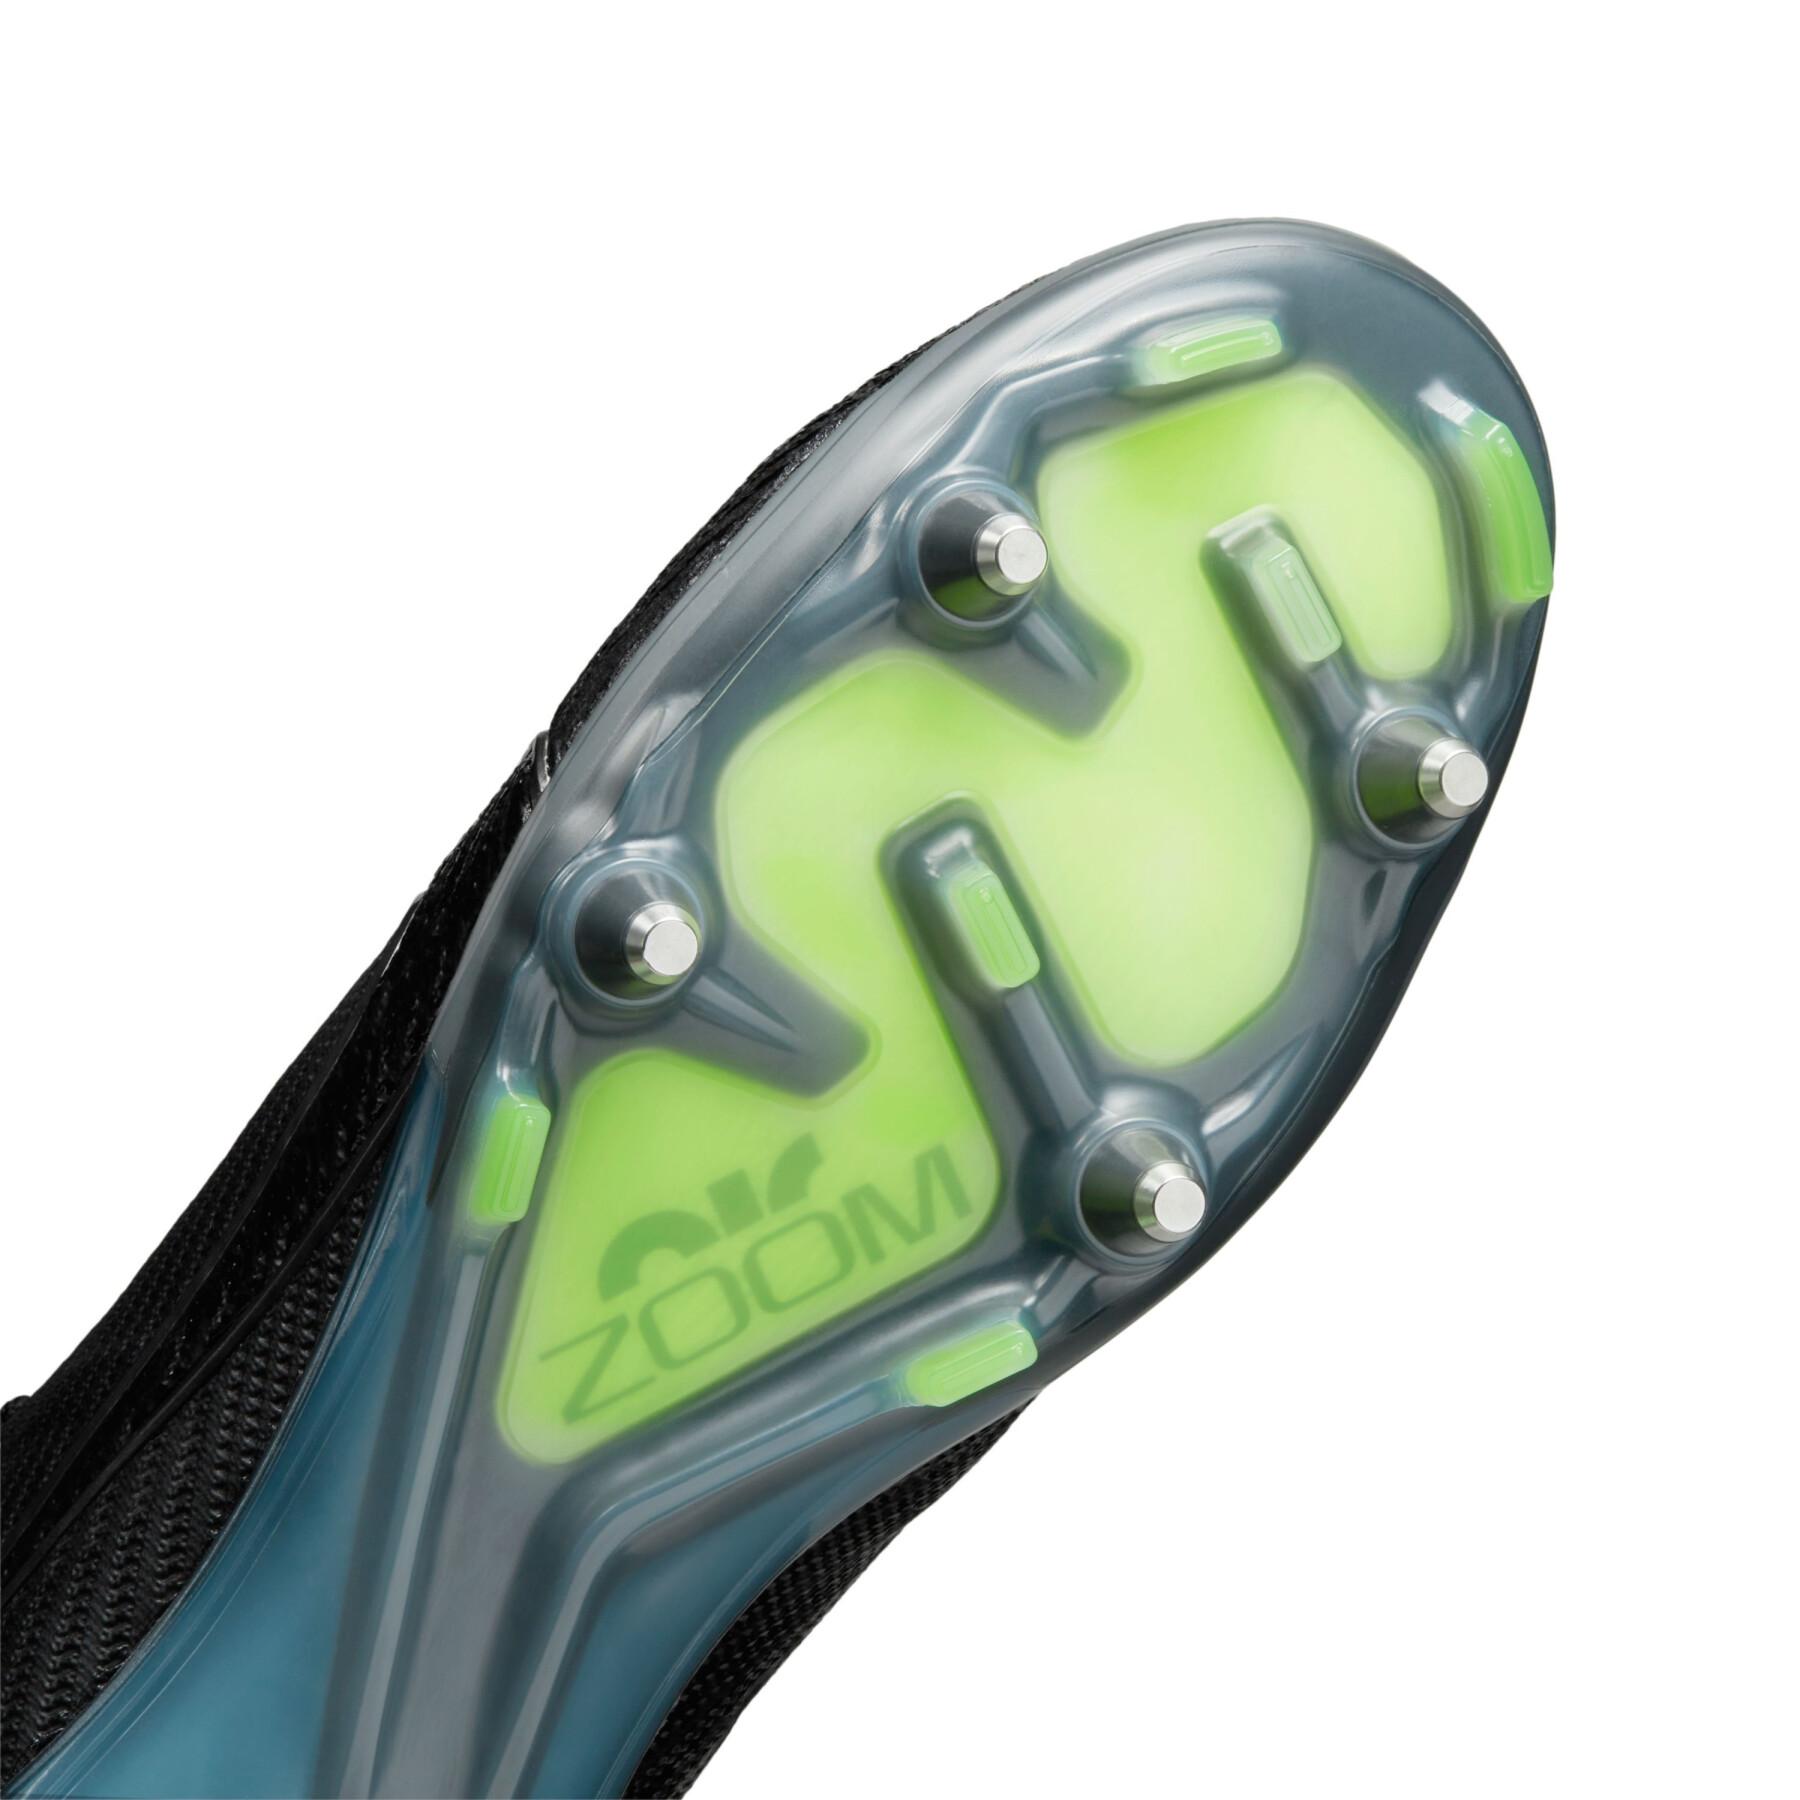 Soccer shoes Nike Zoom Mercurial Superfly 9 Elite SG-Pro - Shadow Black Pack